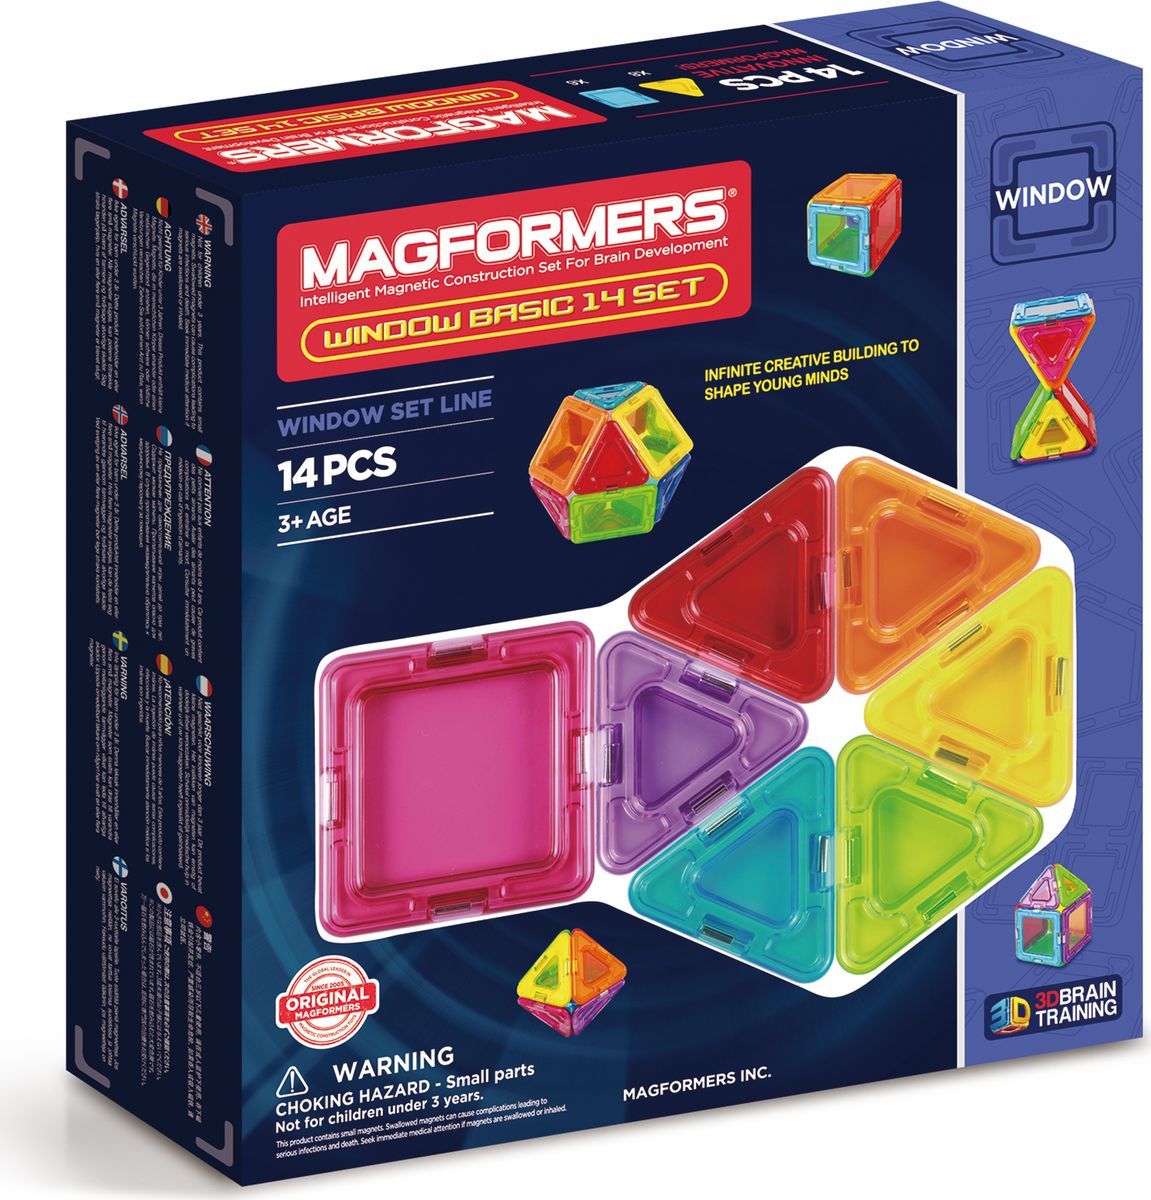 Magformers   Window Basic 14 Set